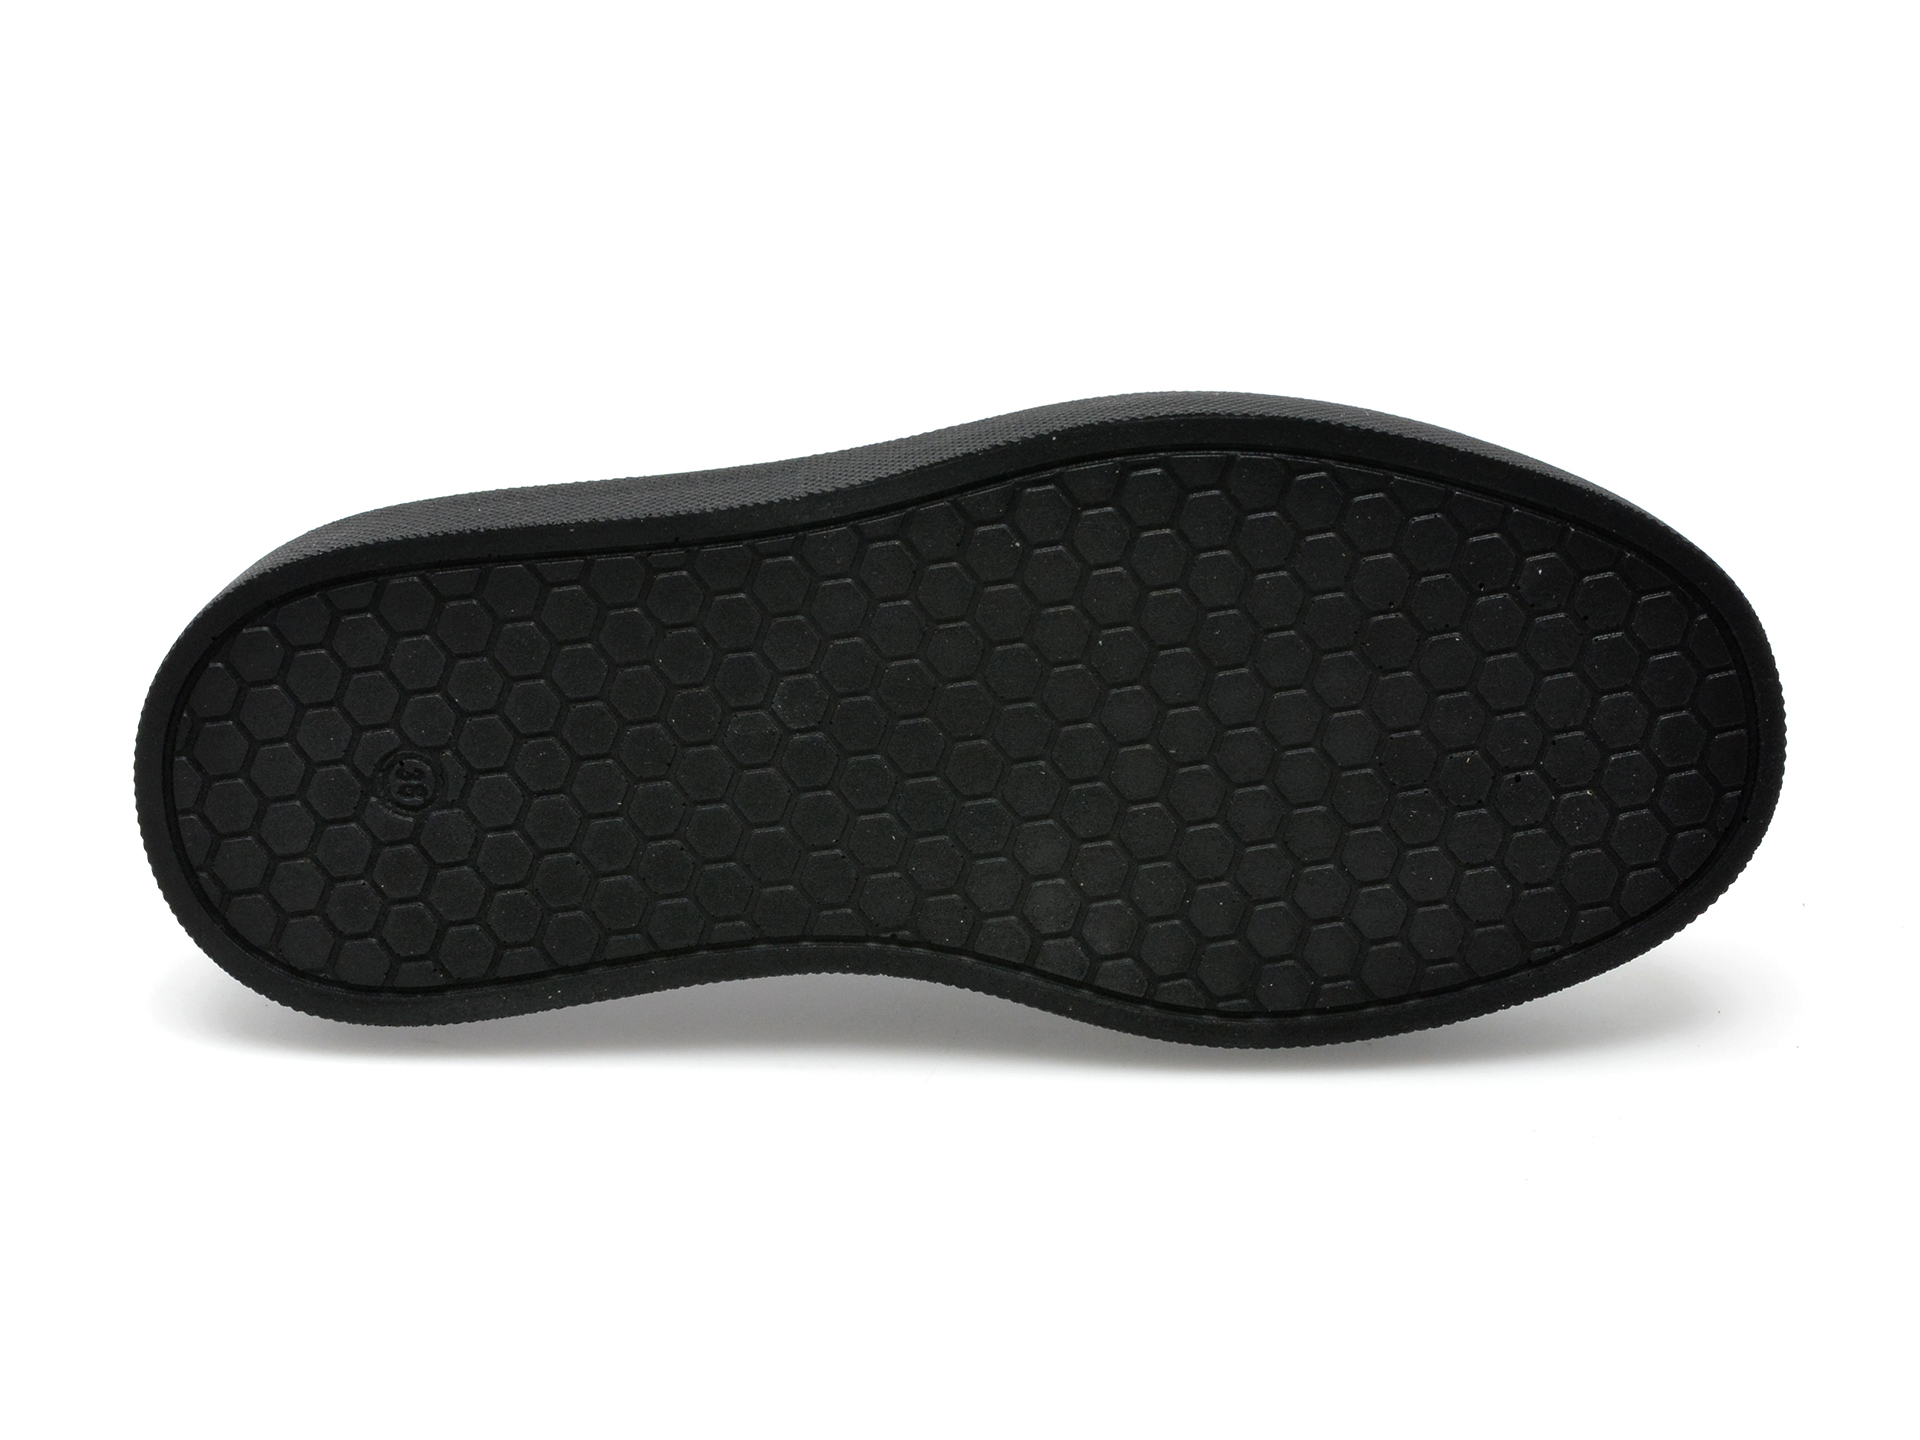 Pantofi EPICA negri, 348986, din piele naturala si material textil